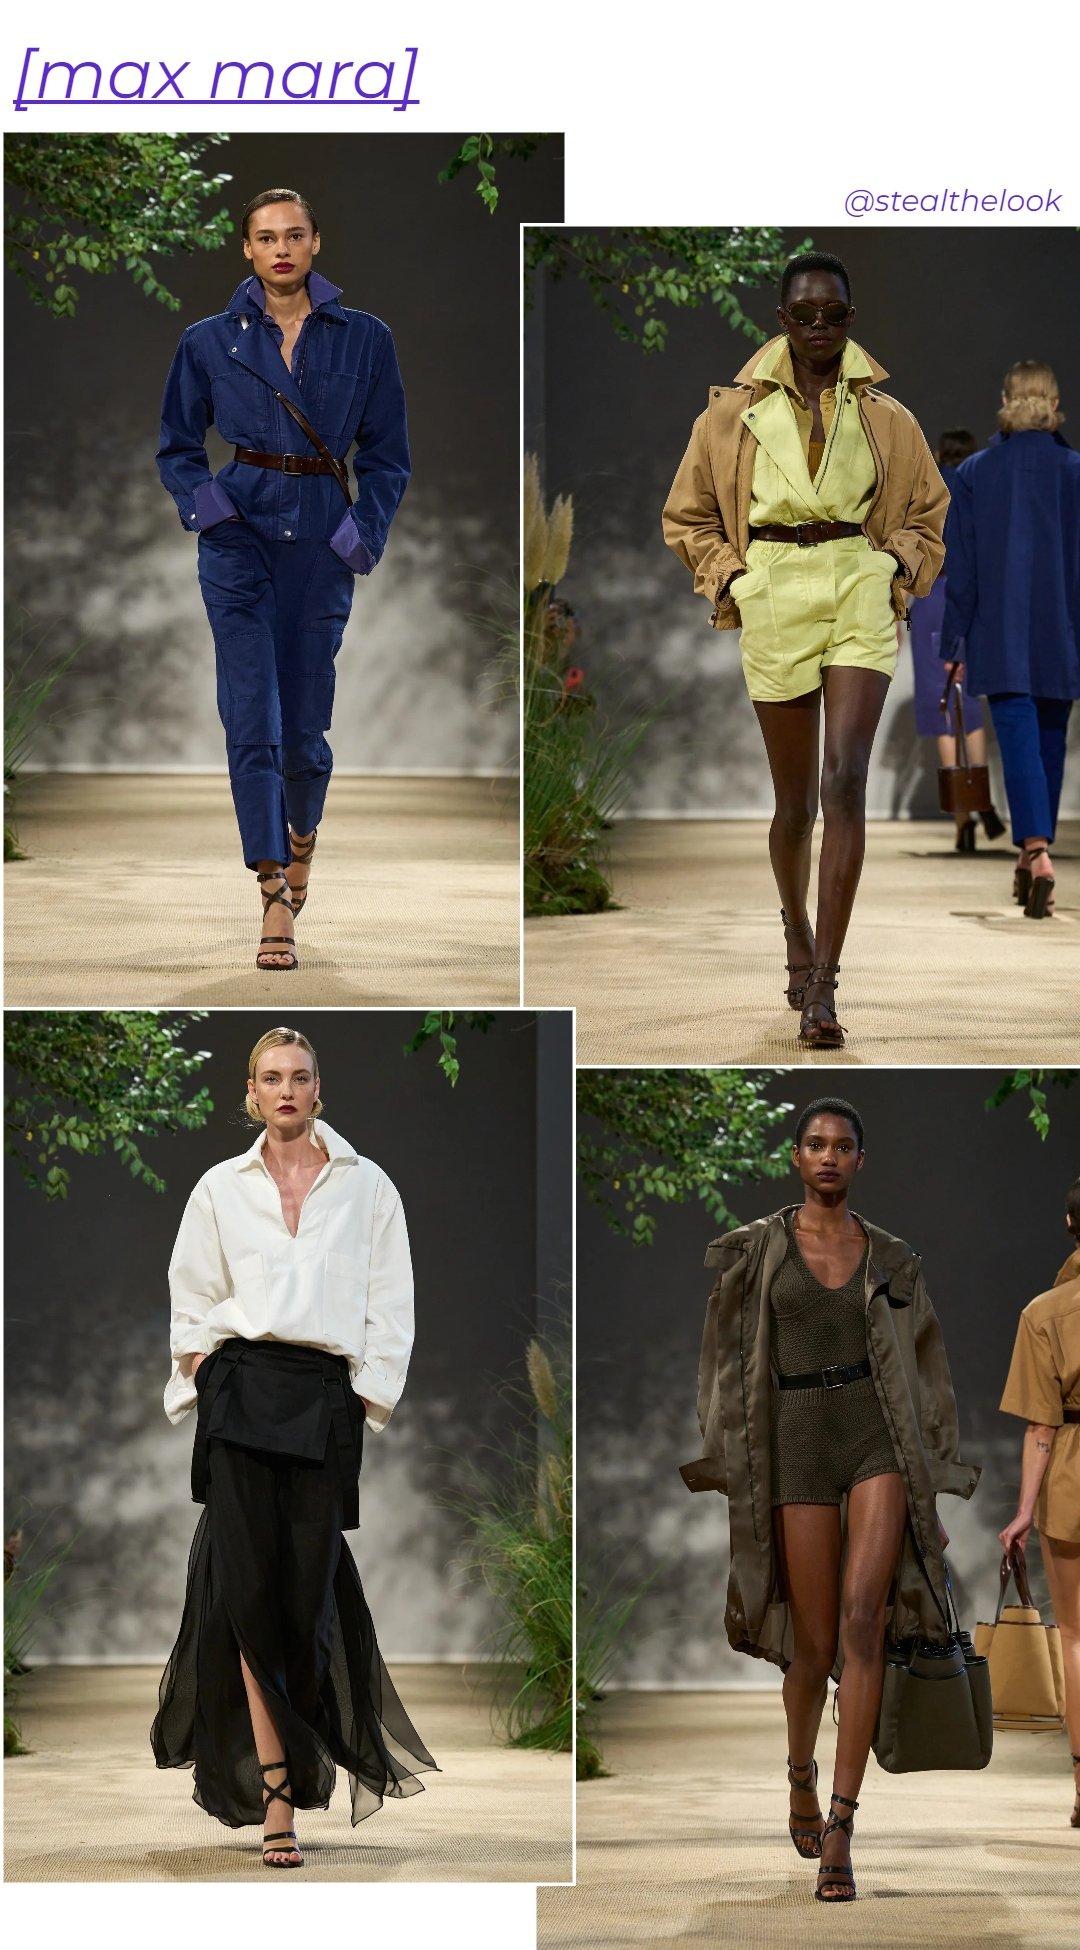 Max Mara - roupas diversas - Milano Fashion Week - primavera - colagem de imagens - https://stealthelook.com.br